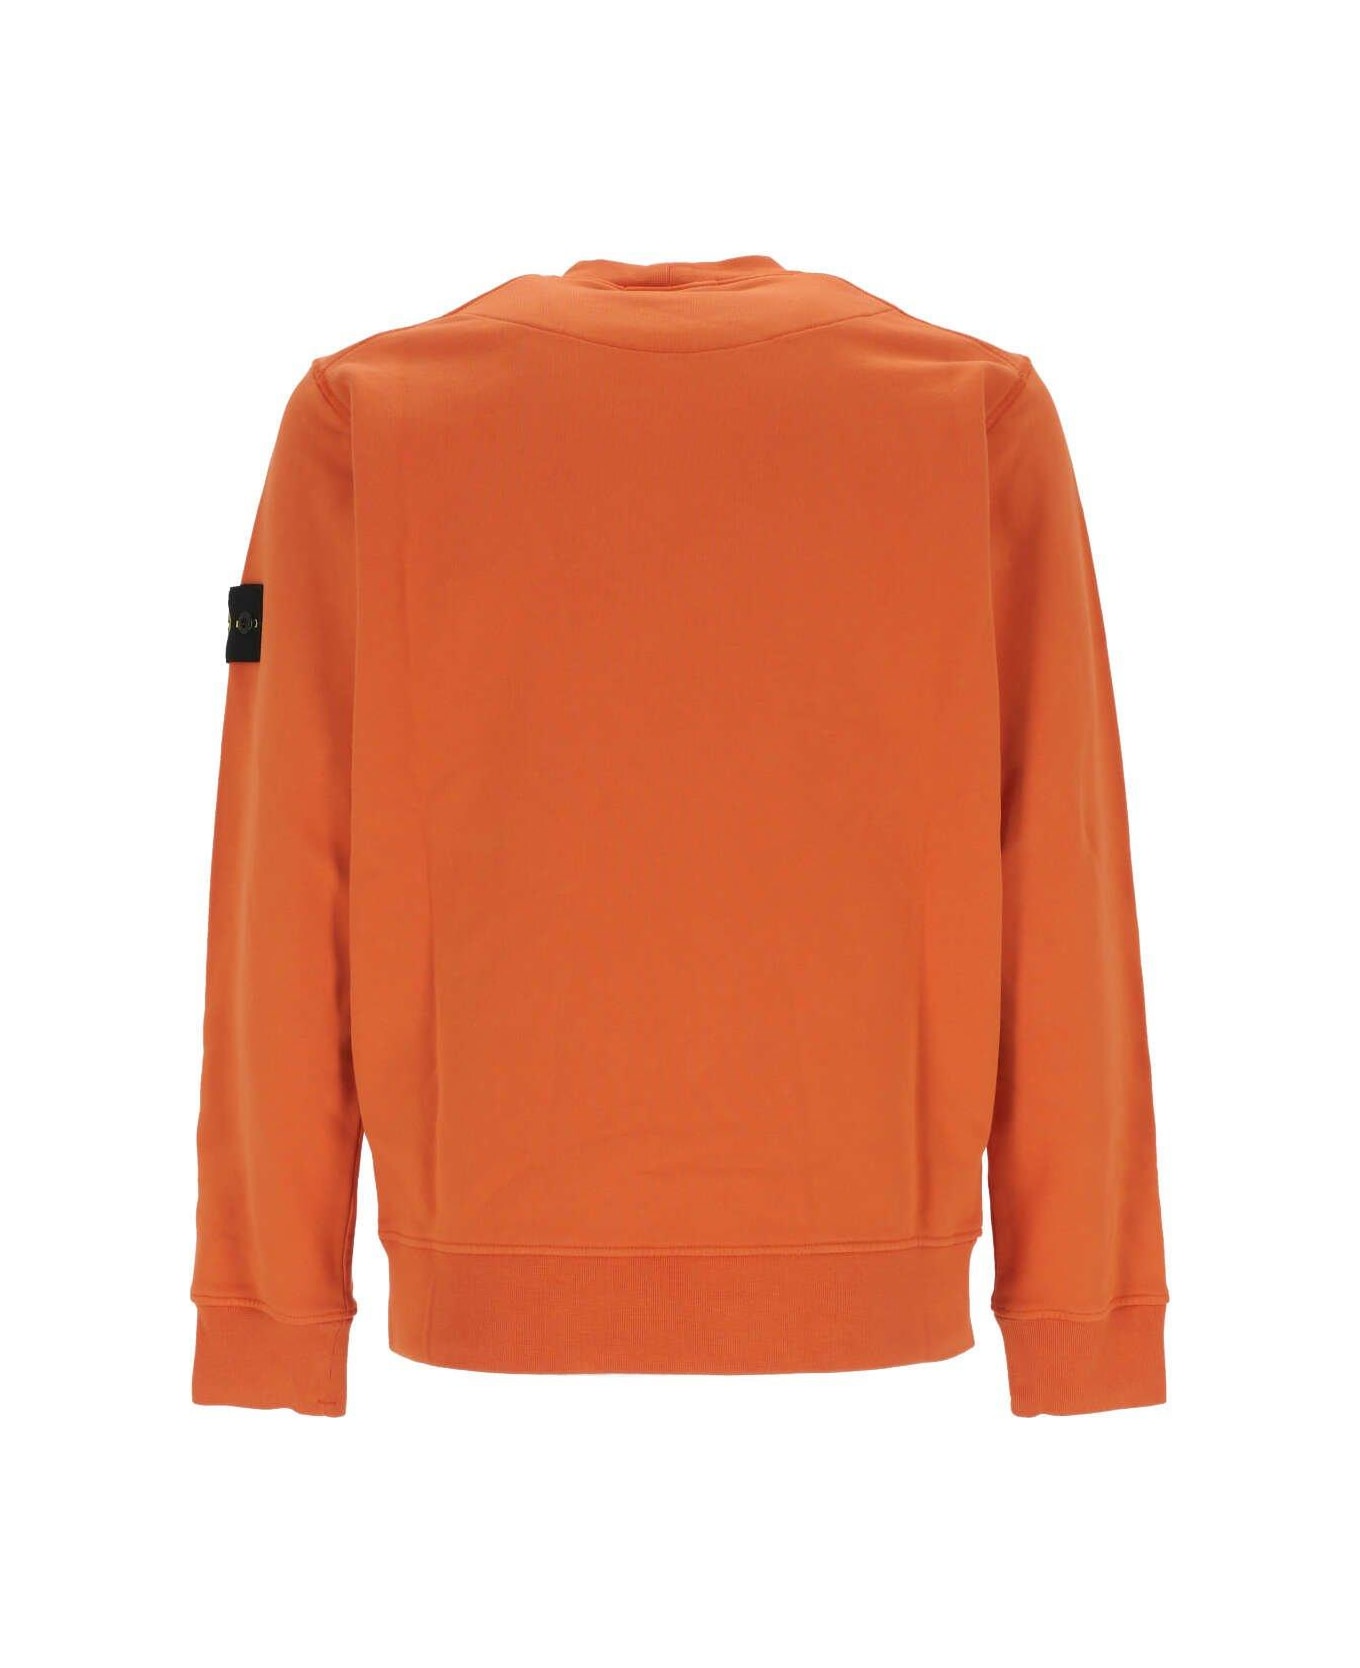 Stone Island Logo Patch Crewneck Sweatshirt - Arancione